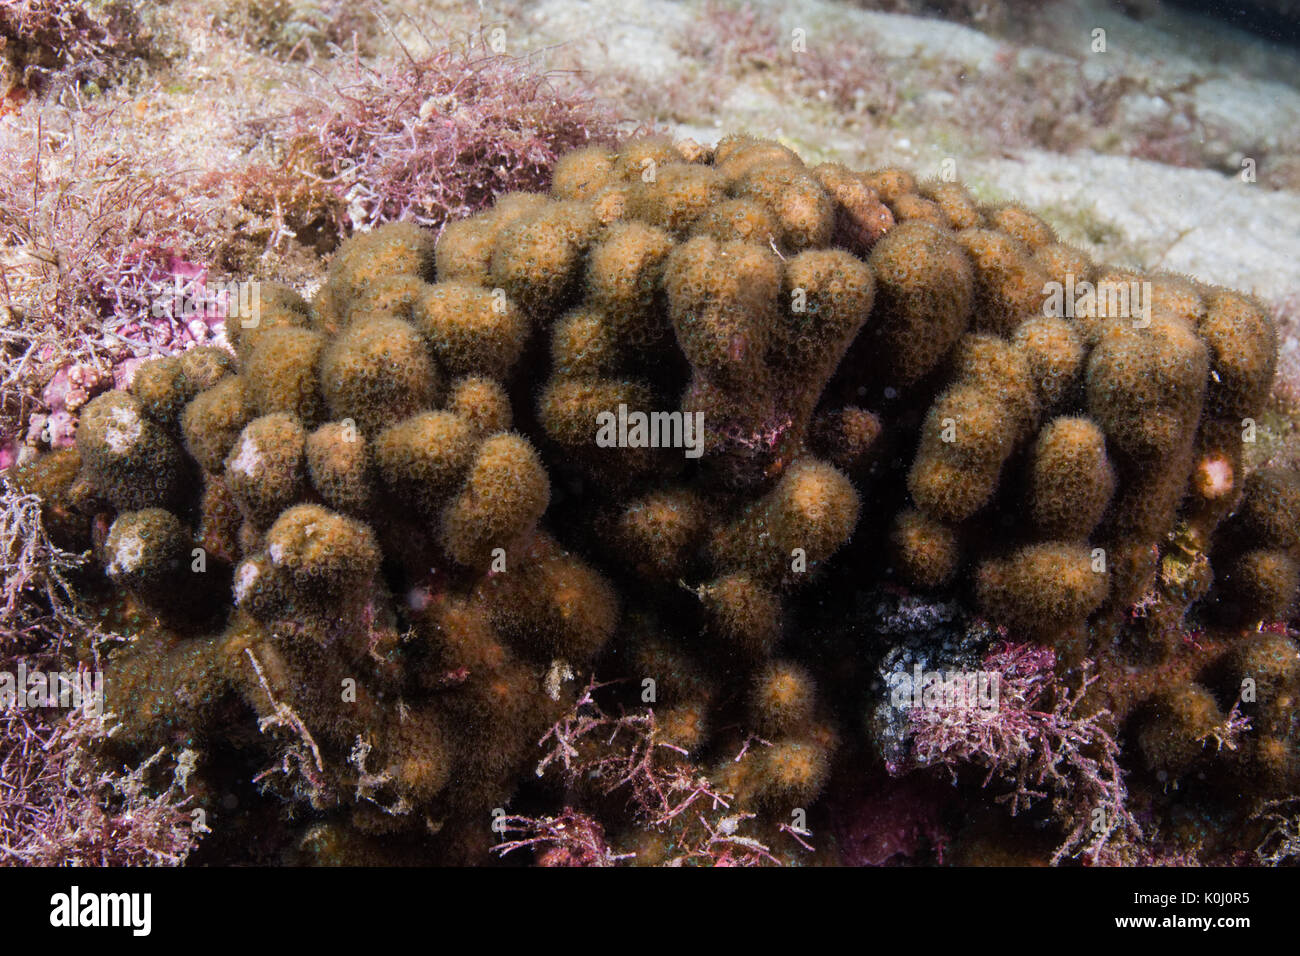 reef coral genus madracis, species madracis decactis, underwater Queimada Grande island, southeast Brazil Stock Photo